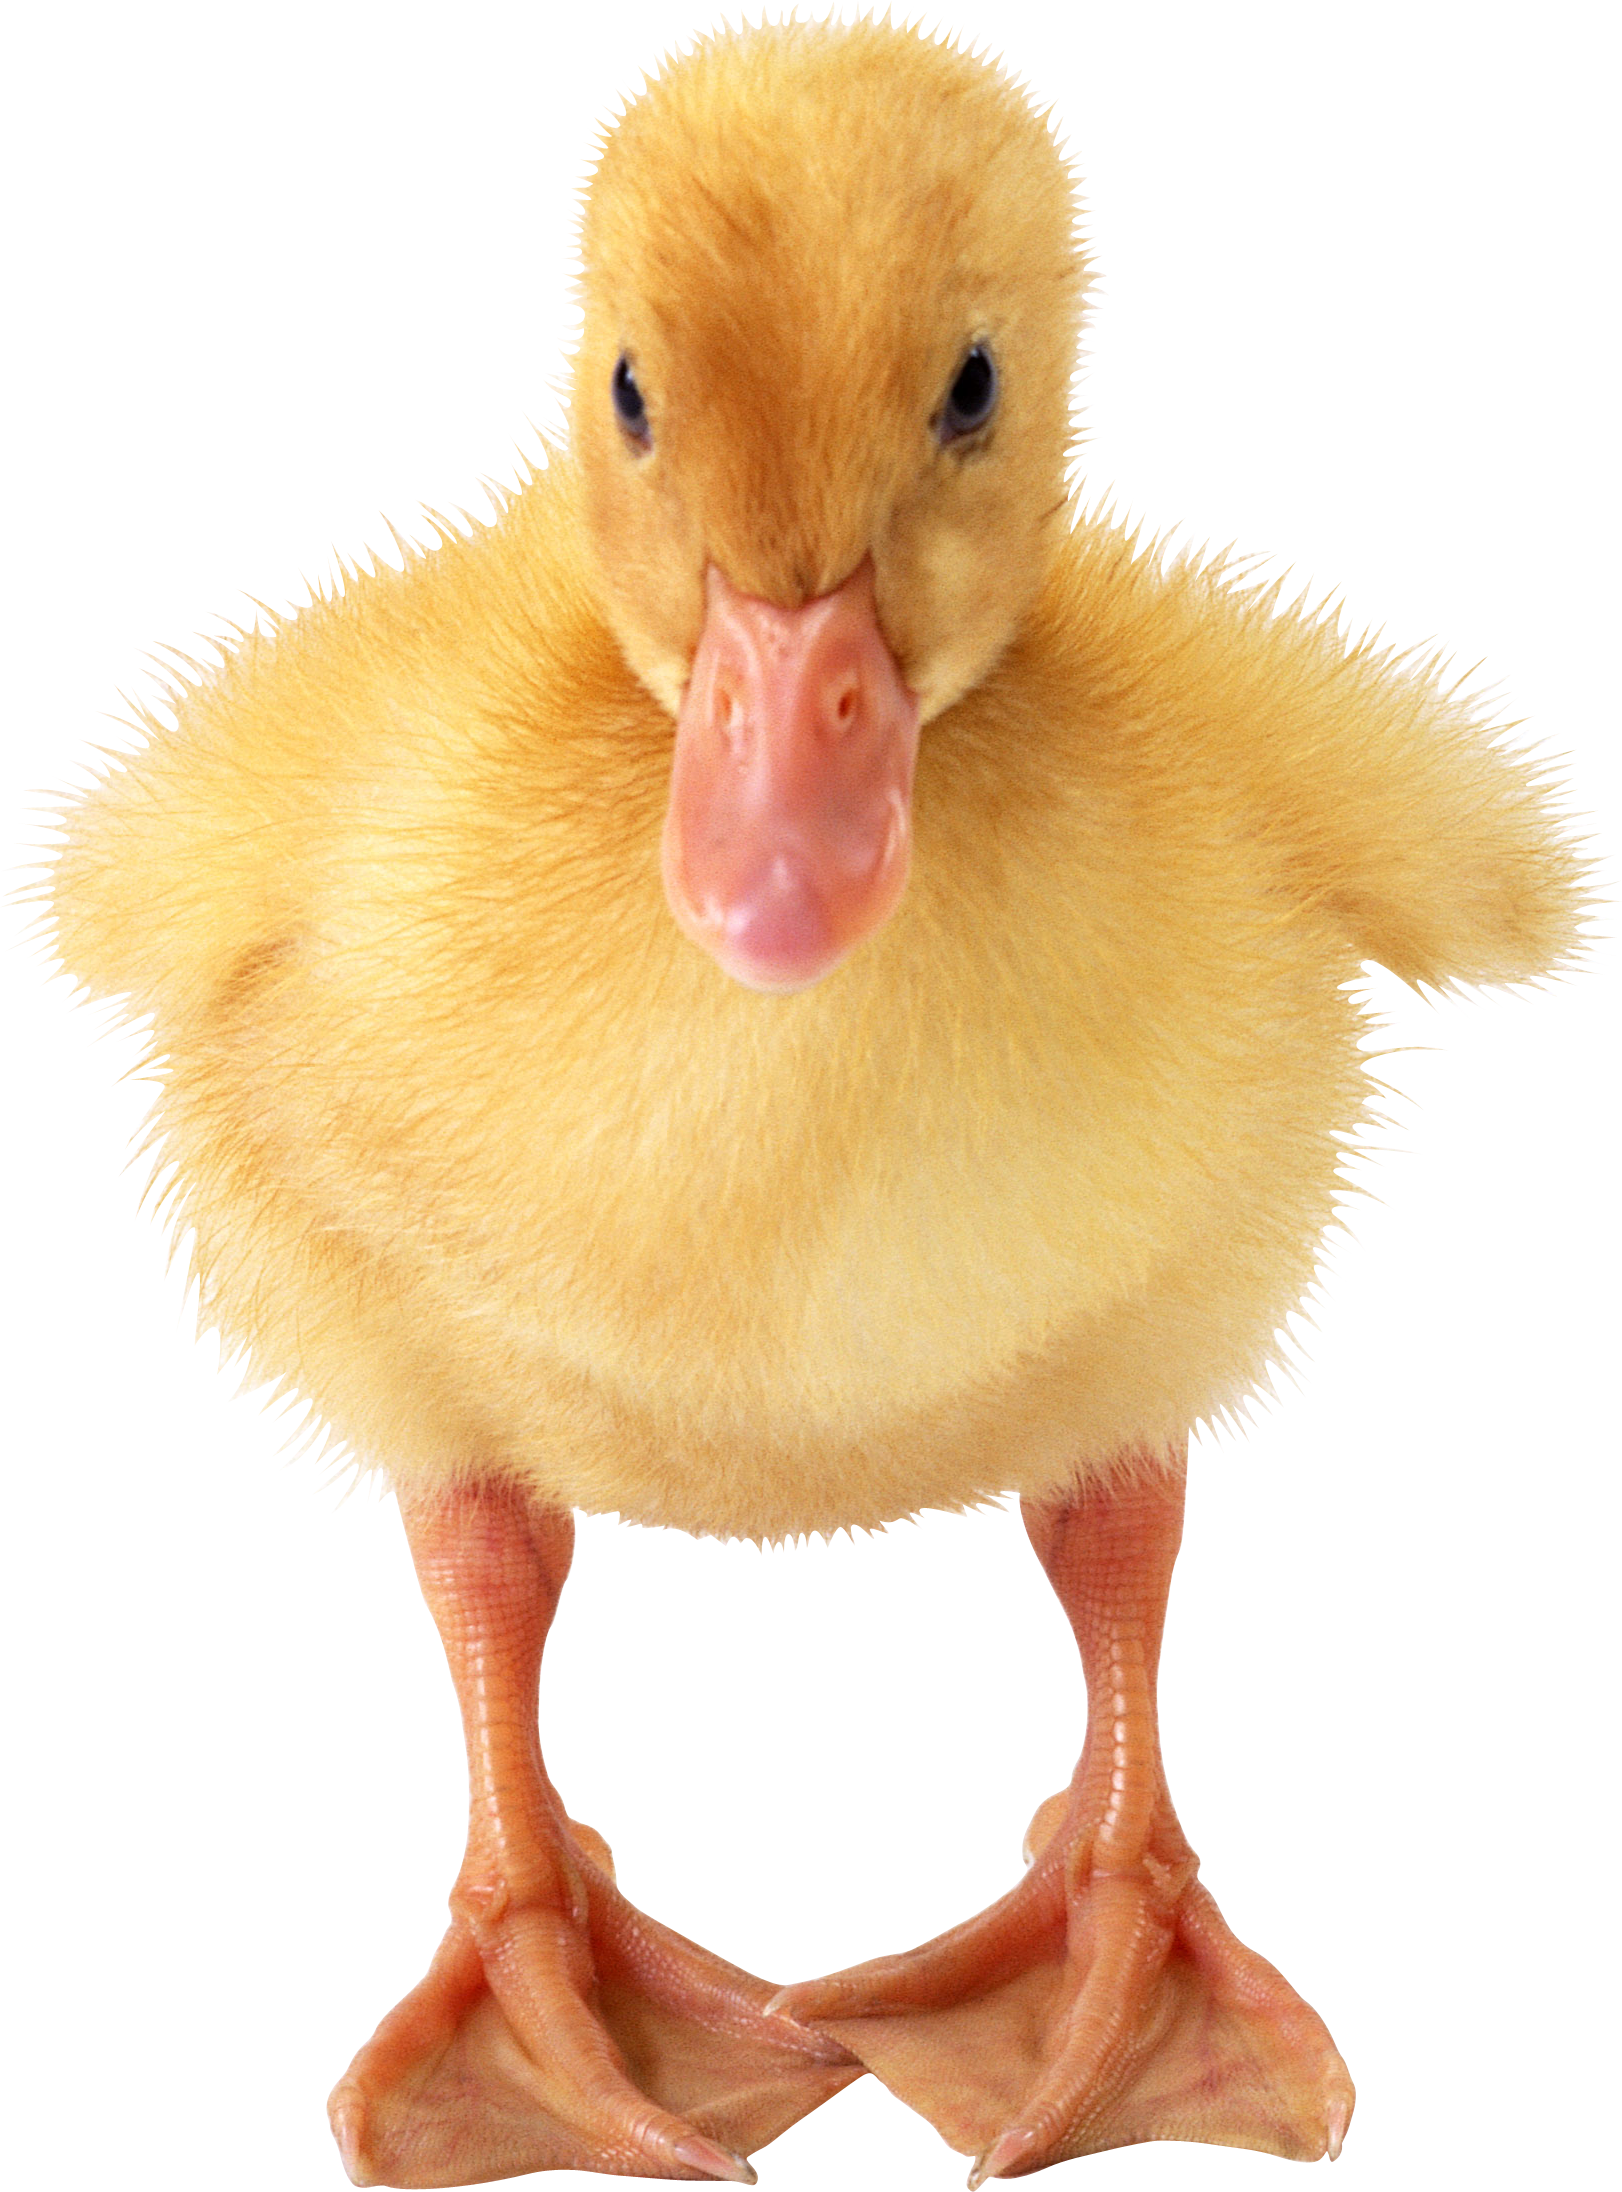 pin Duckling clipart duck swi